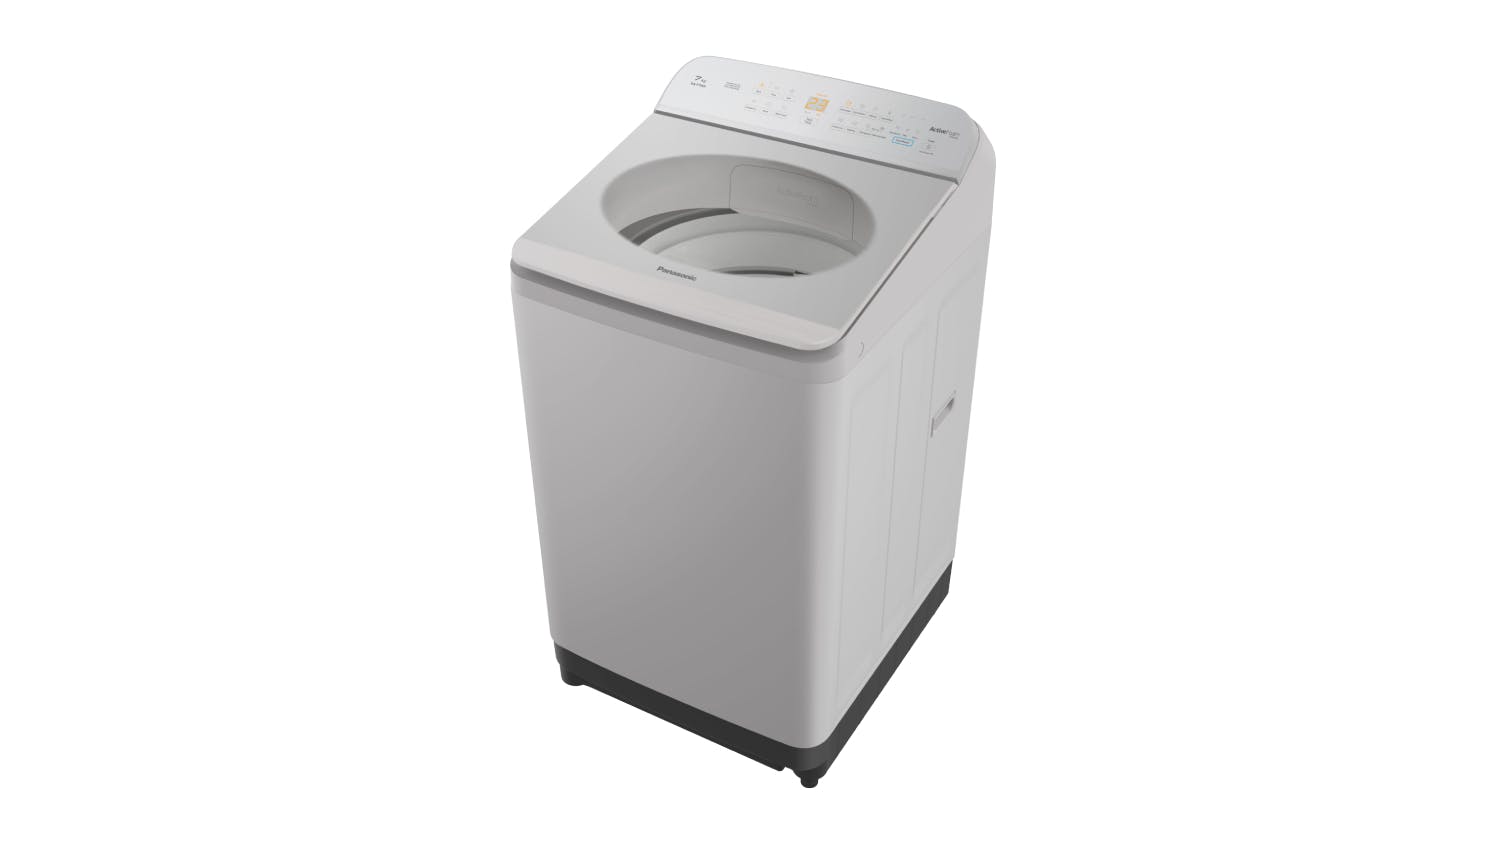 Panasonic 7kg 7 Program Top Loading Washing Machine - Grey (NA-F70A9HNZ)